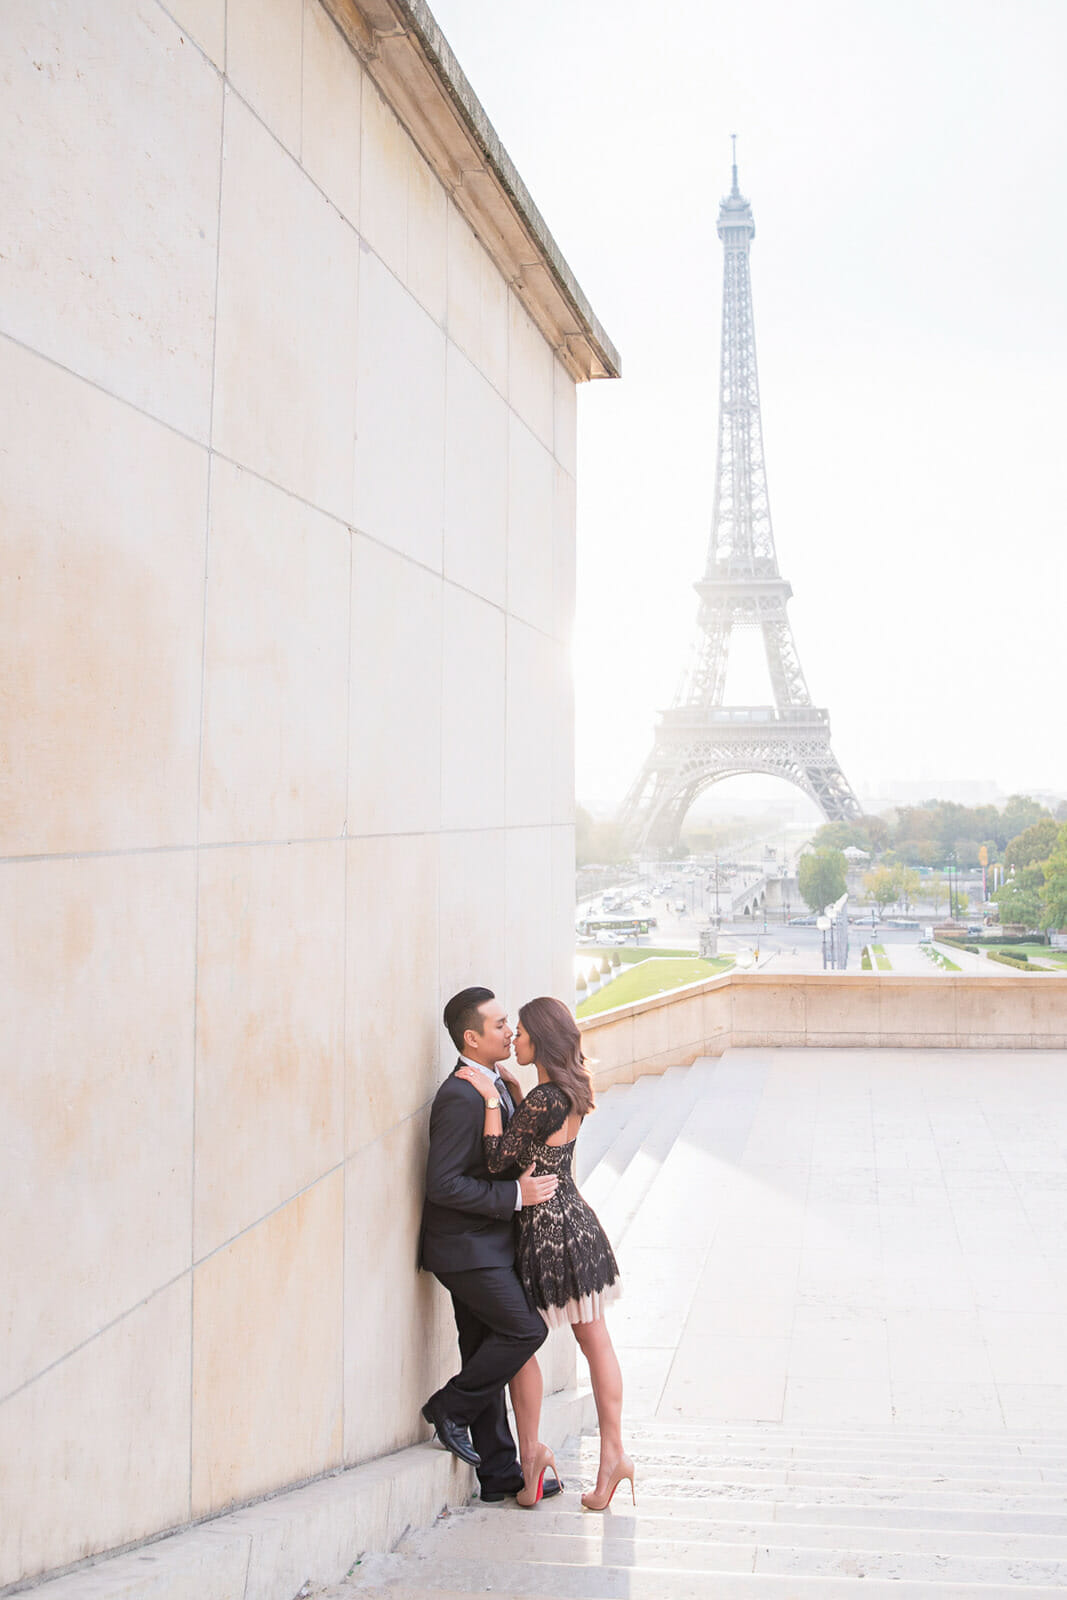 Dreamy couple photoshoot at Trocadero Eiffel Tower at sunrise